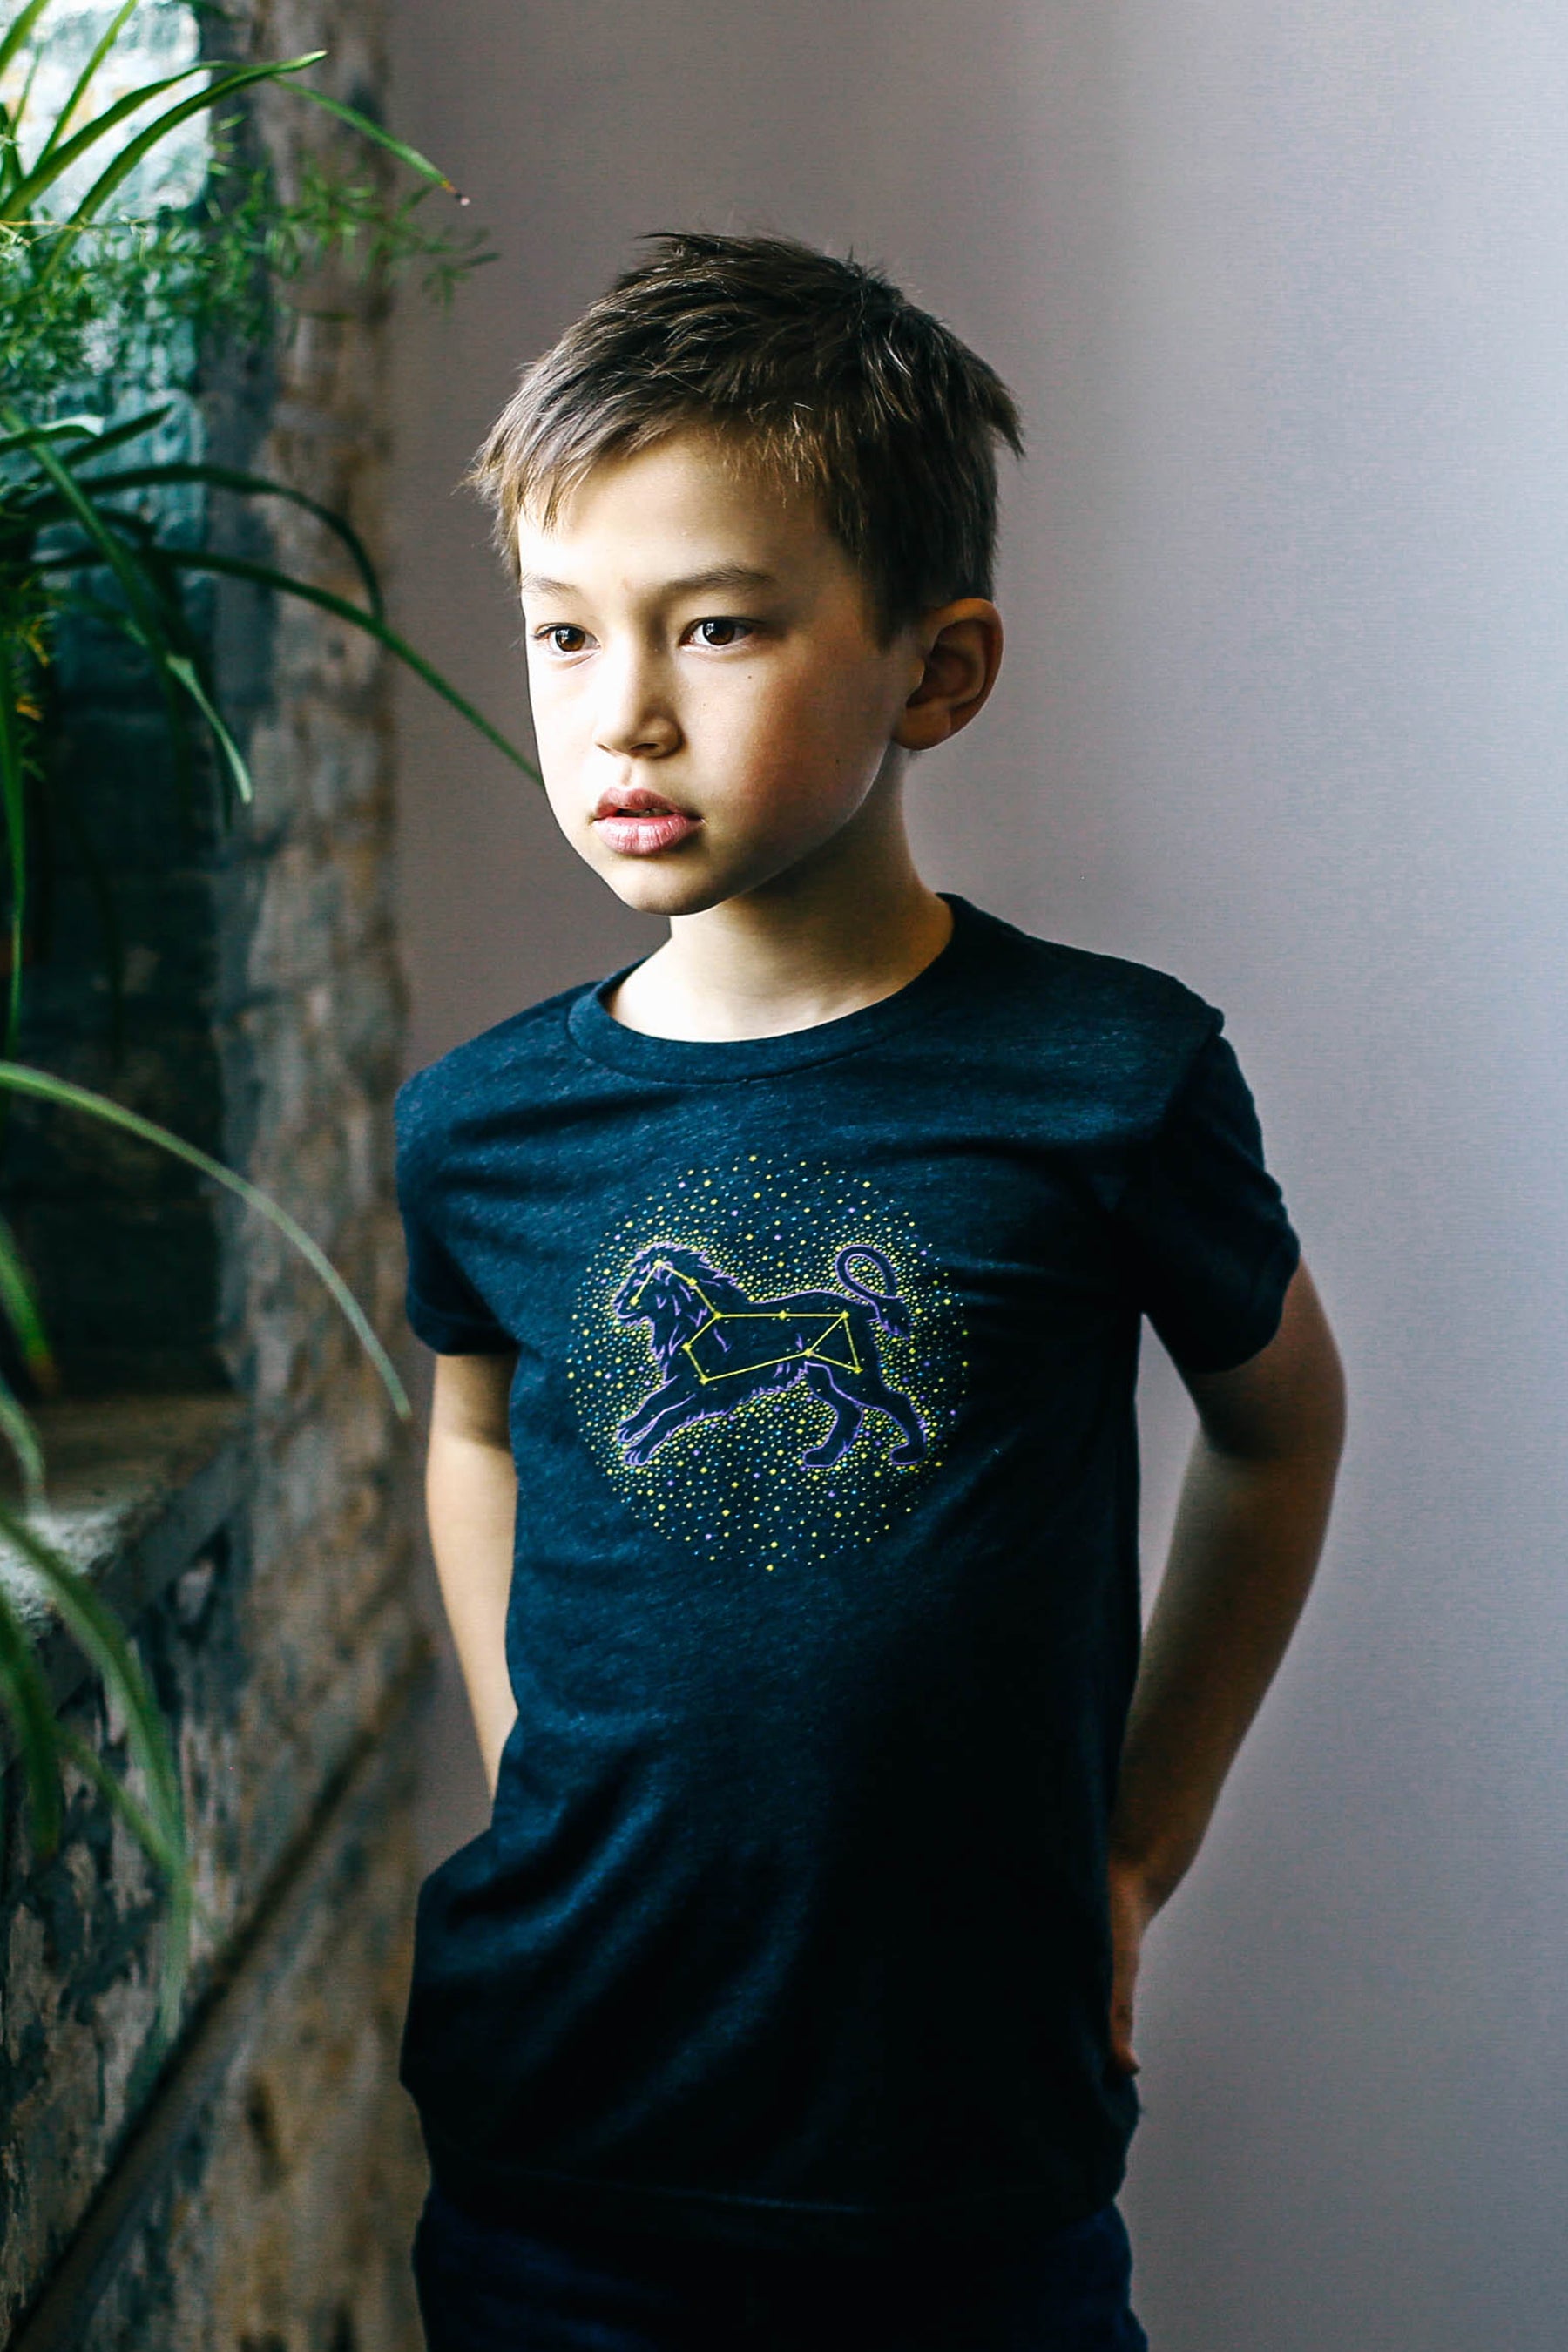 the – T-shirt Lion Apparel Black Kids Triblend Street Orchard Leo